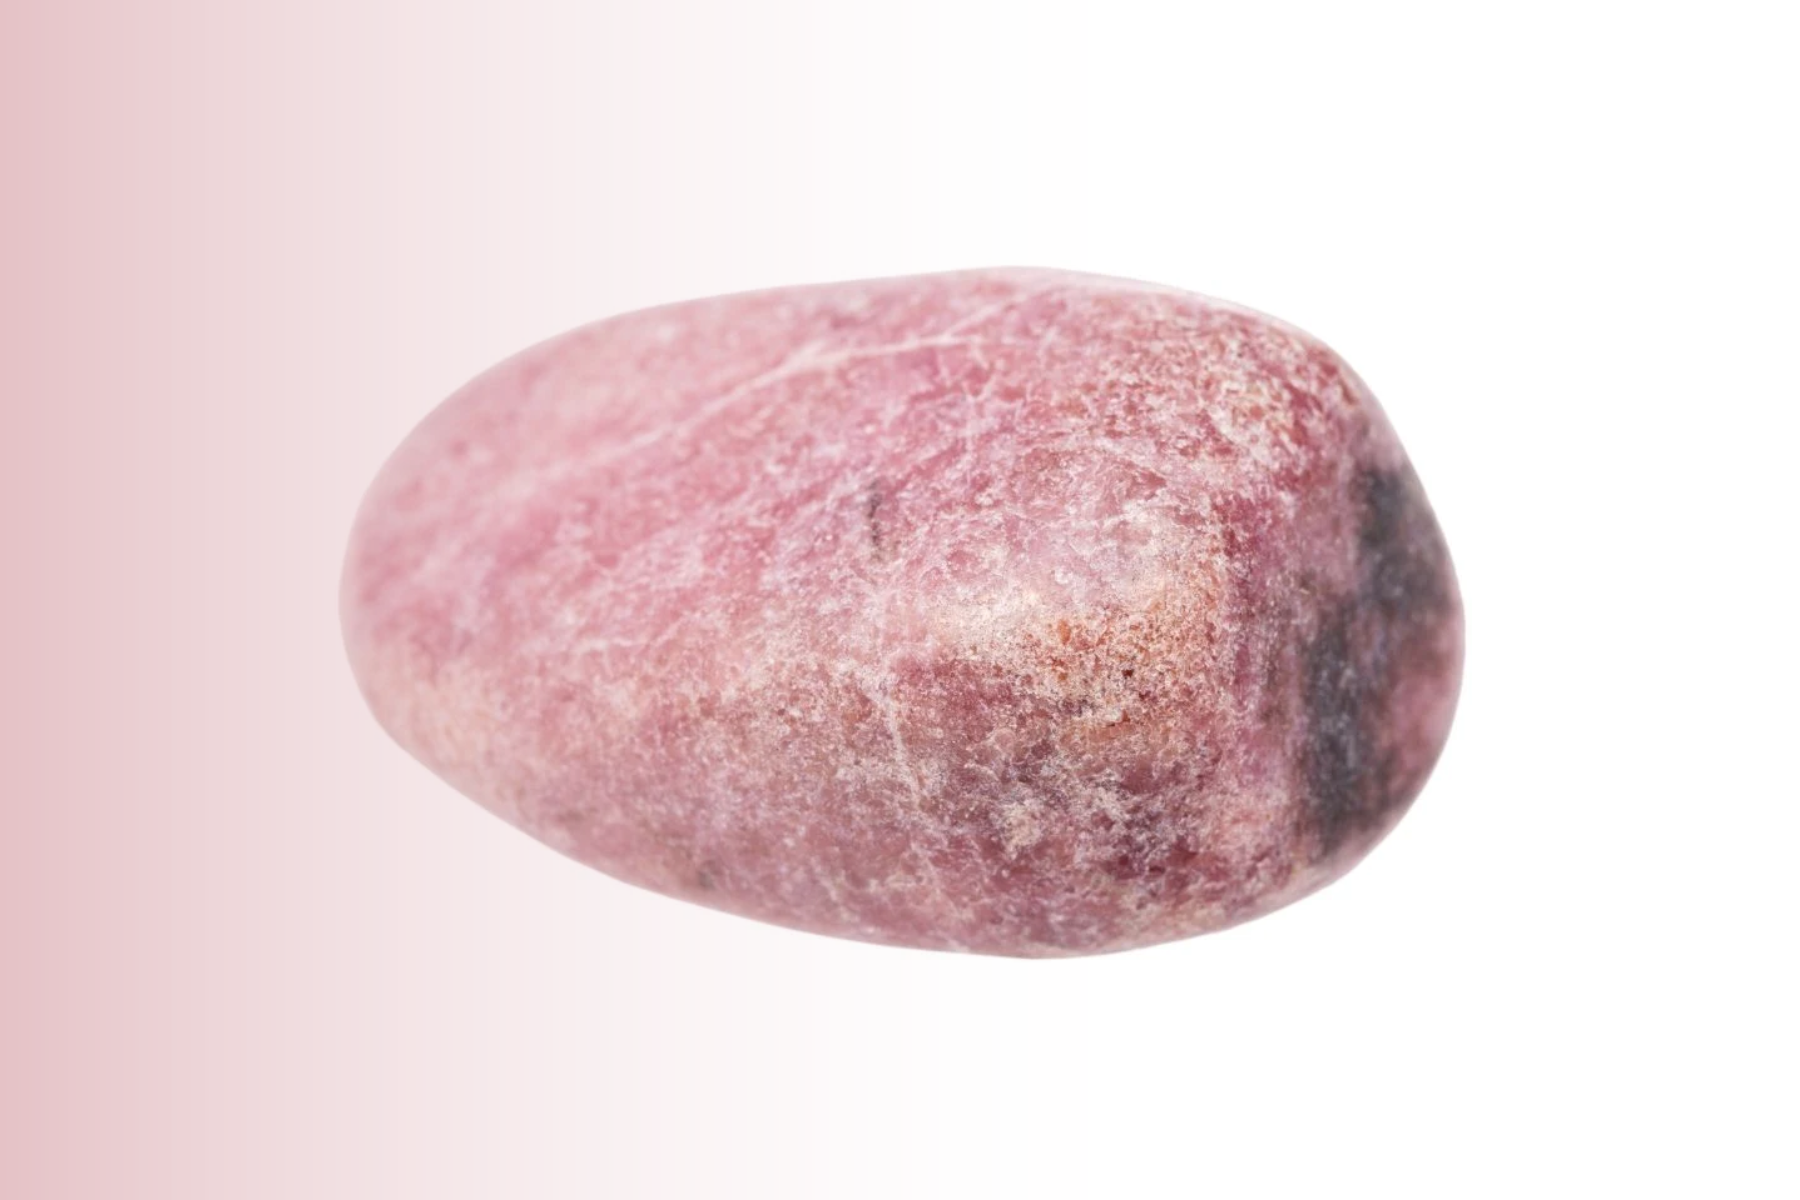 Rock-formed rhodonite stone